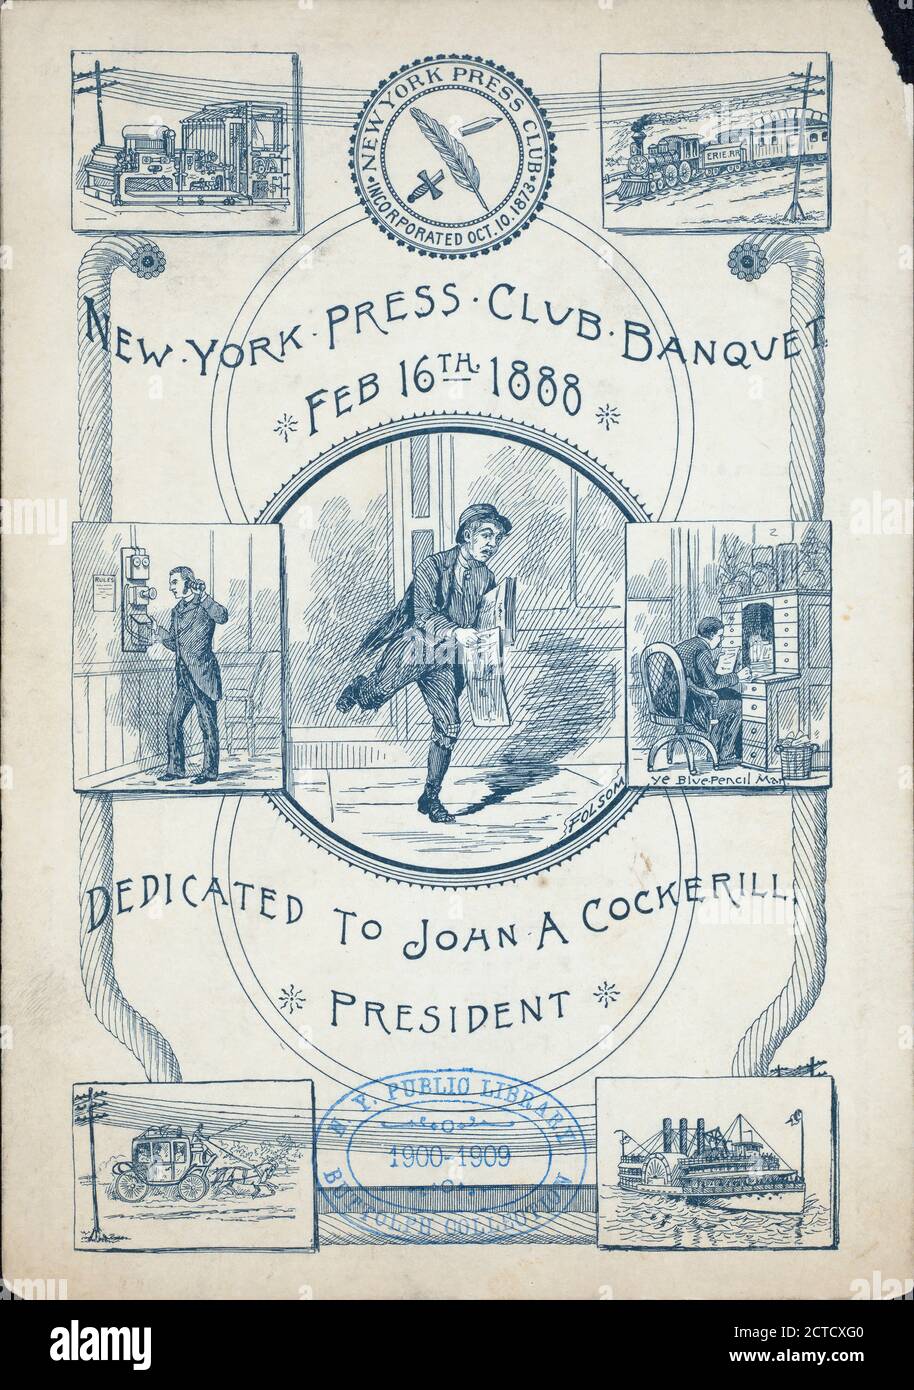 BANQUET DEDICATED TO JOHN A. COCKERILL, PRESIDENT held by NEW YORK PRESS CLUB at DELMONICO'S (HOT;), still image, Menus, 1888 Stock Photo